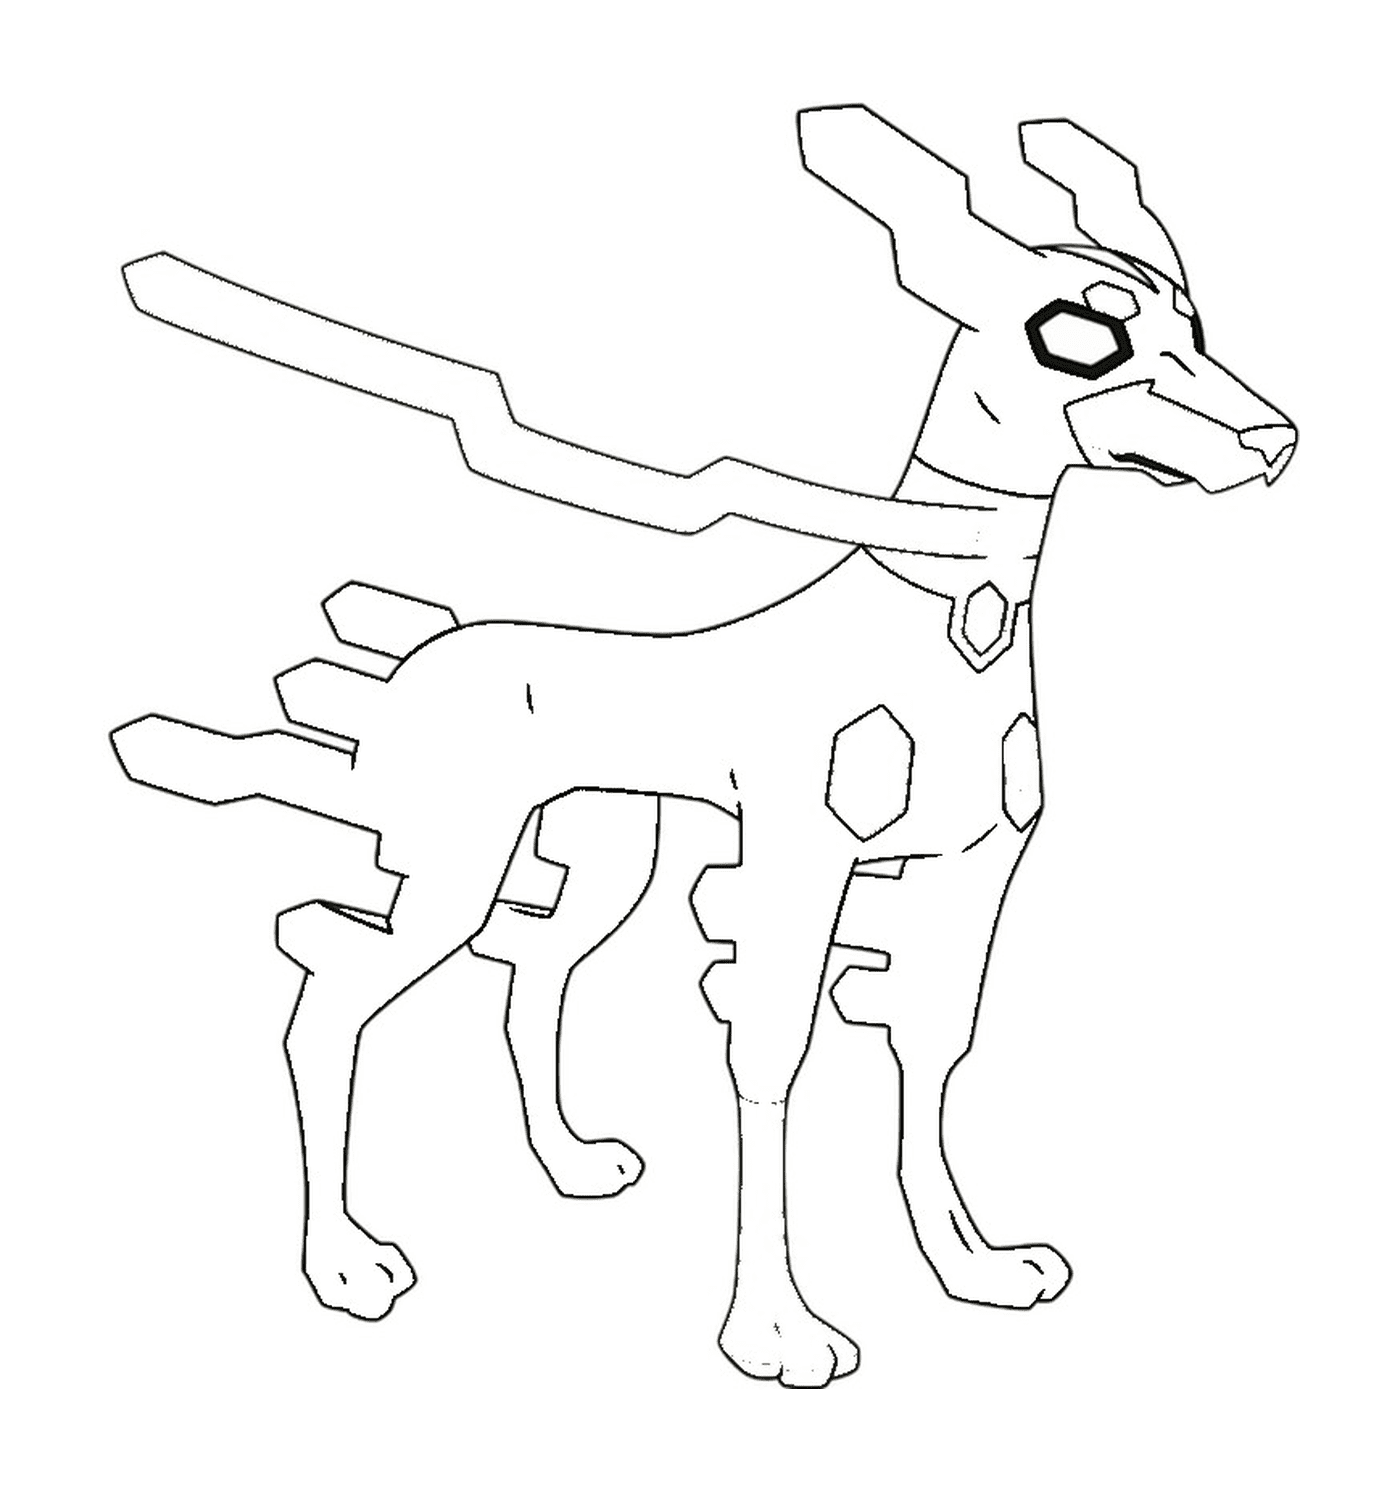  Zygarde Form 10, standing dog 